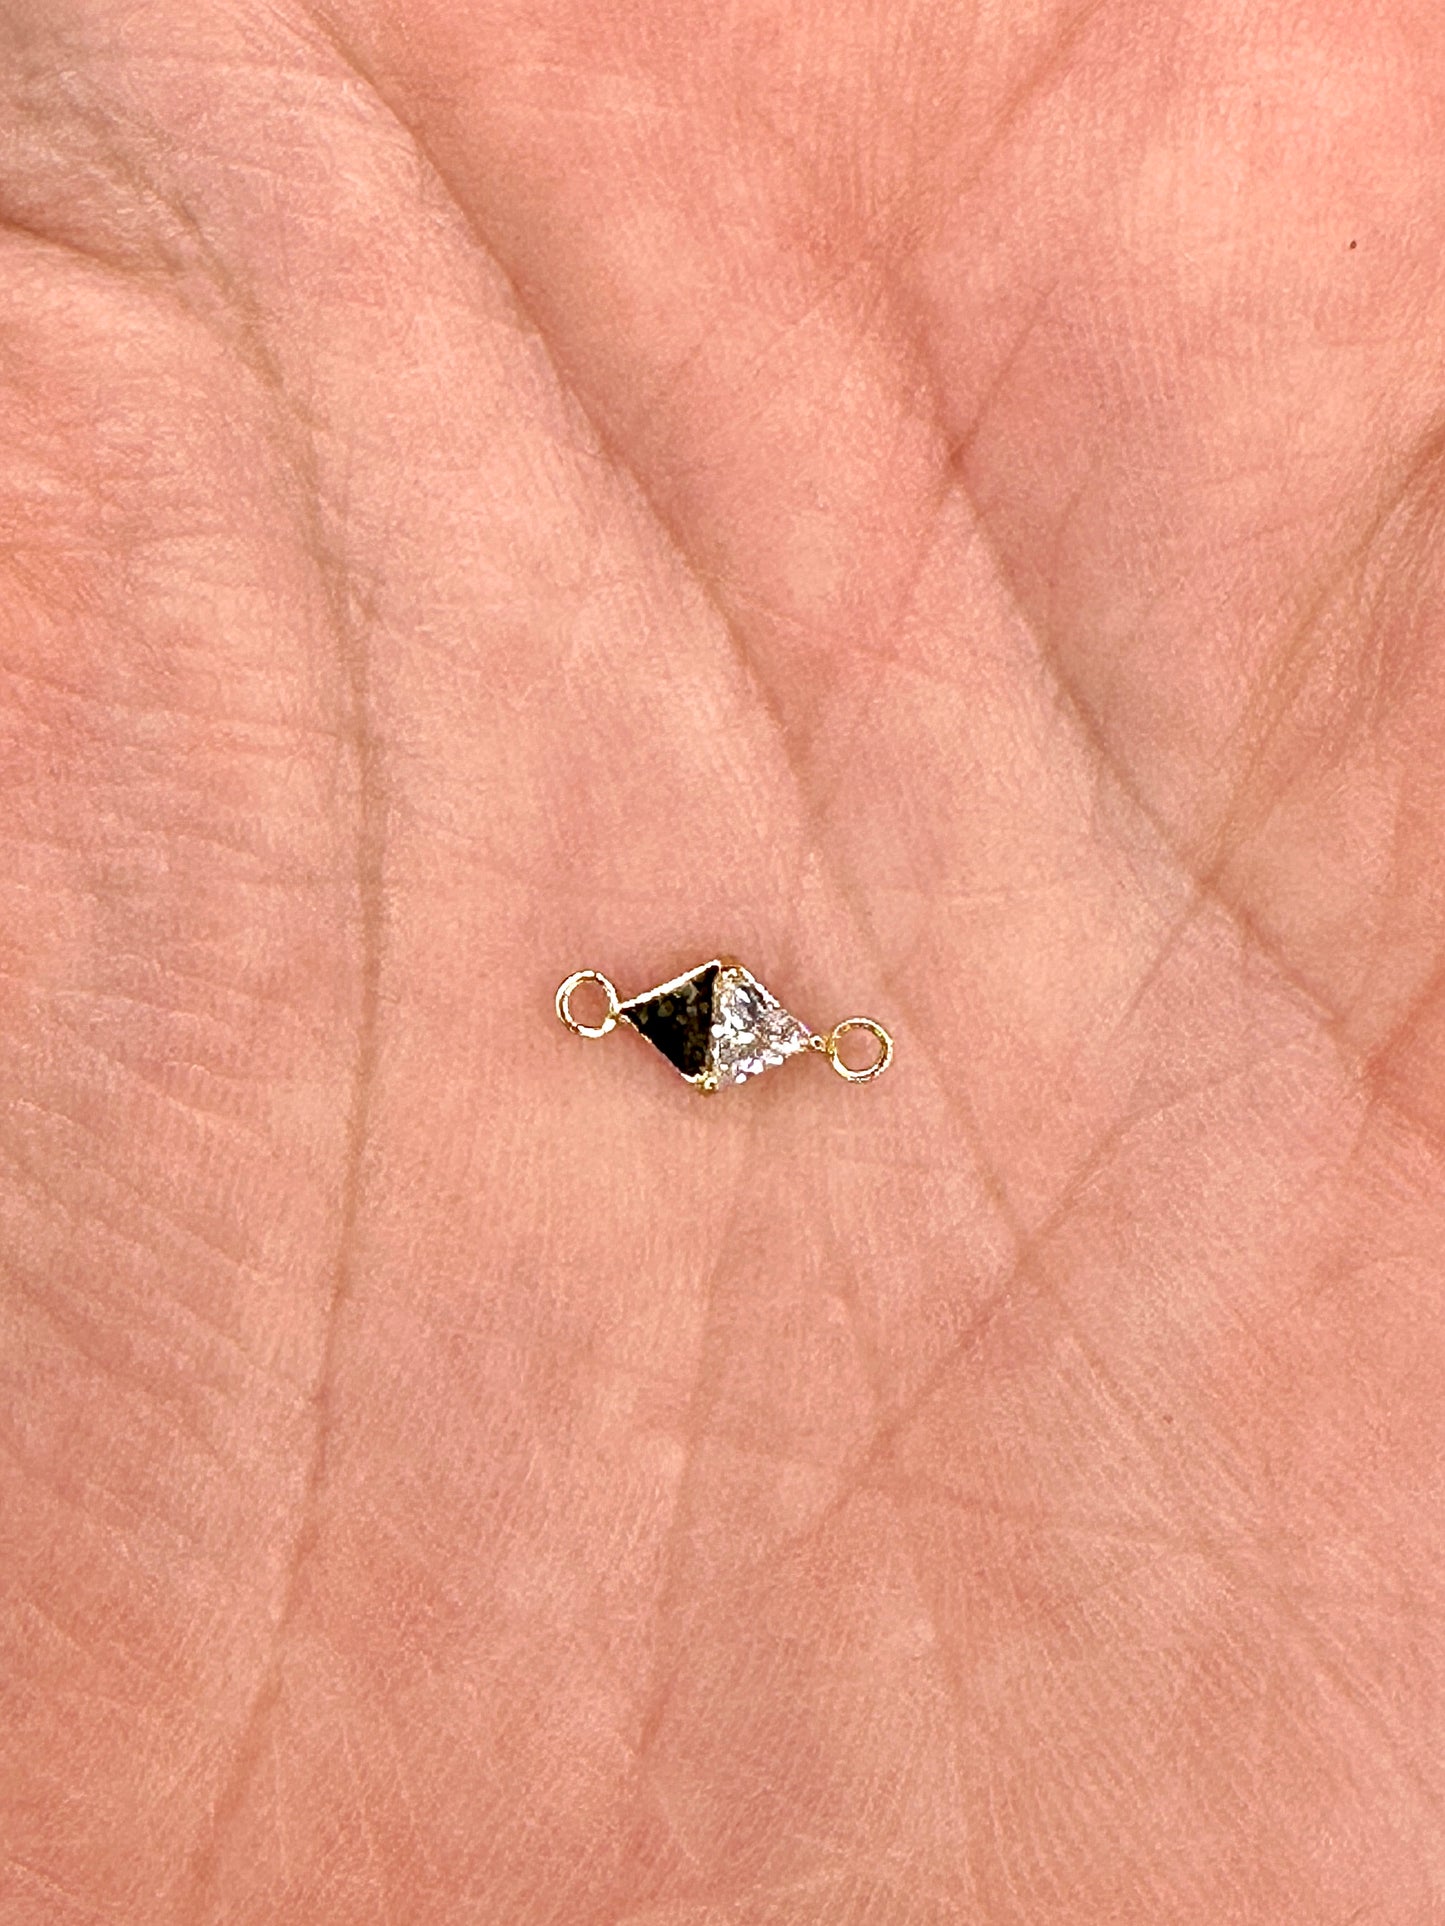 Half Gold Half Gemstone Diamond Shape Connector